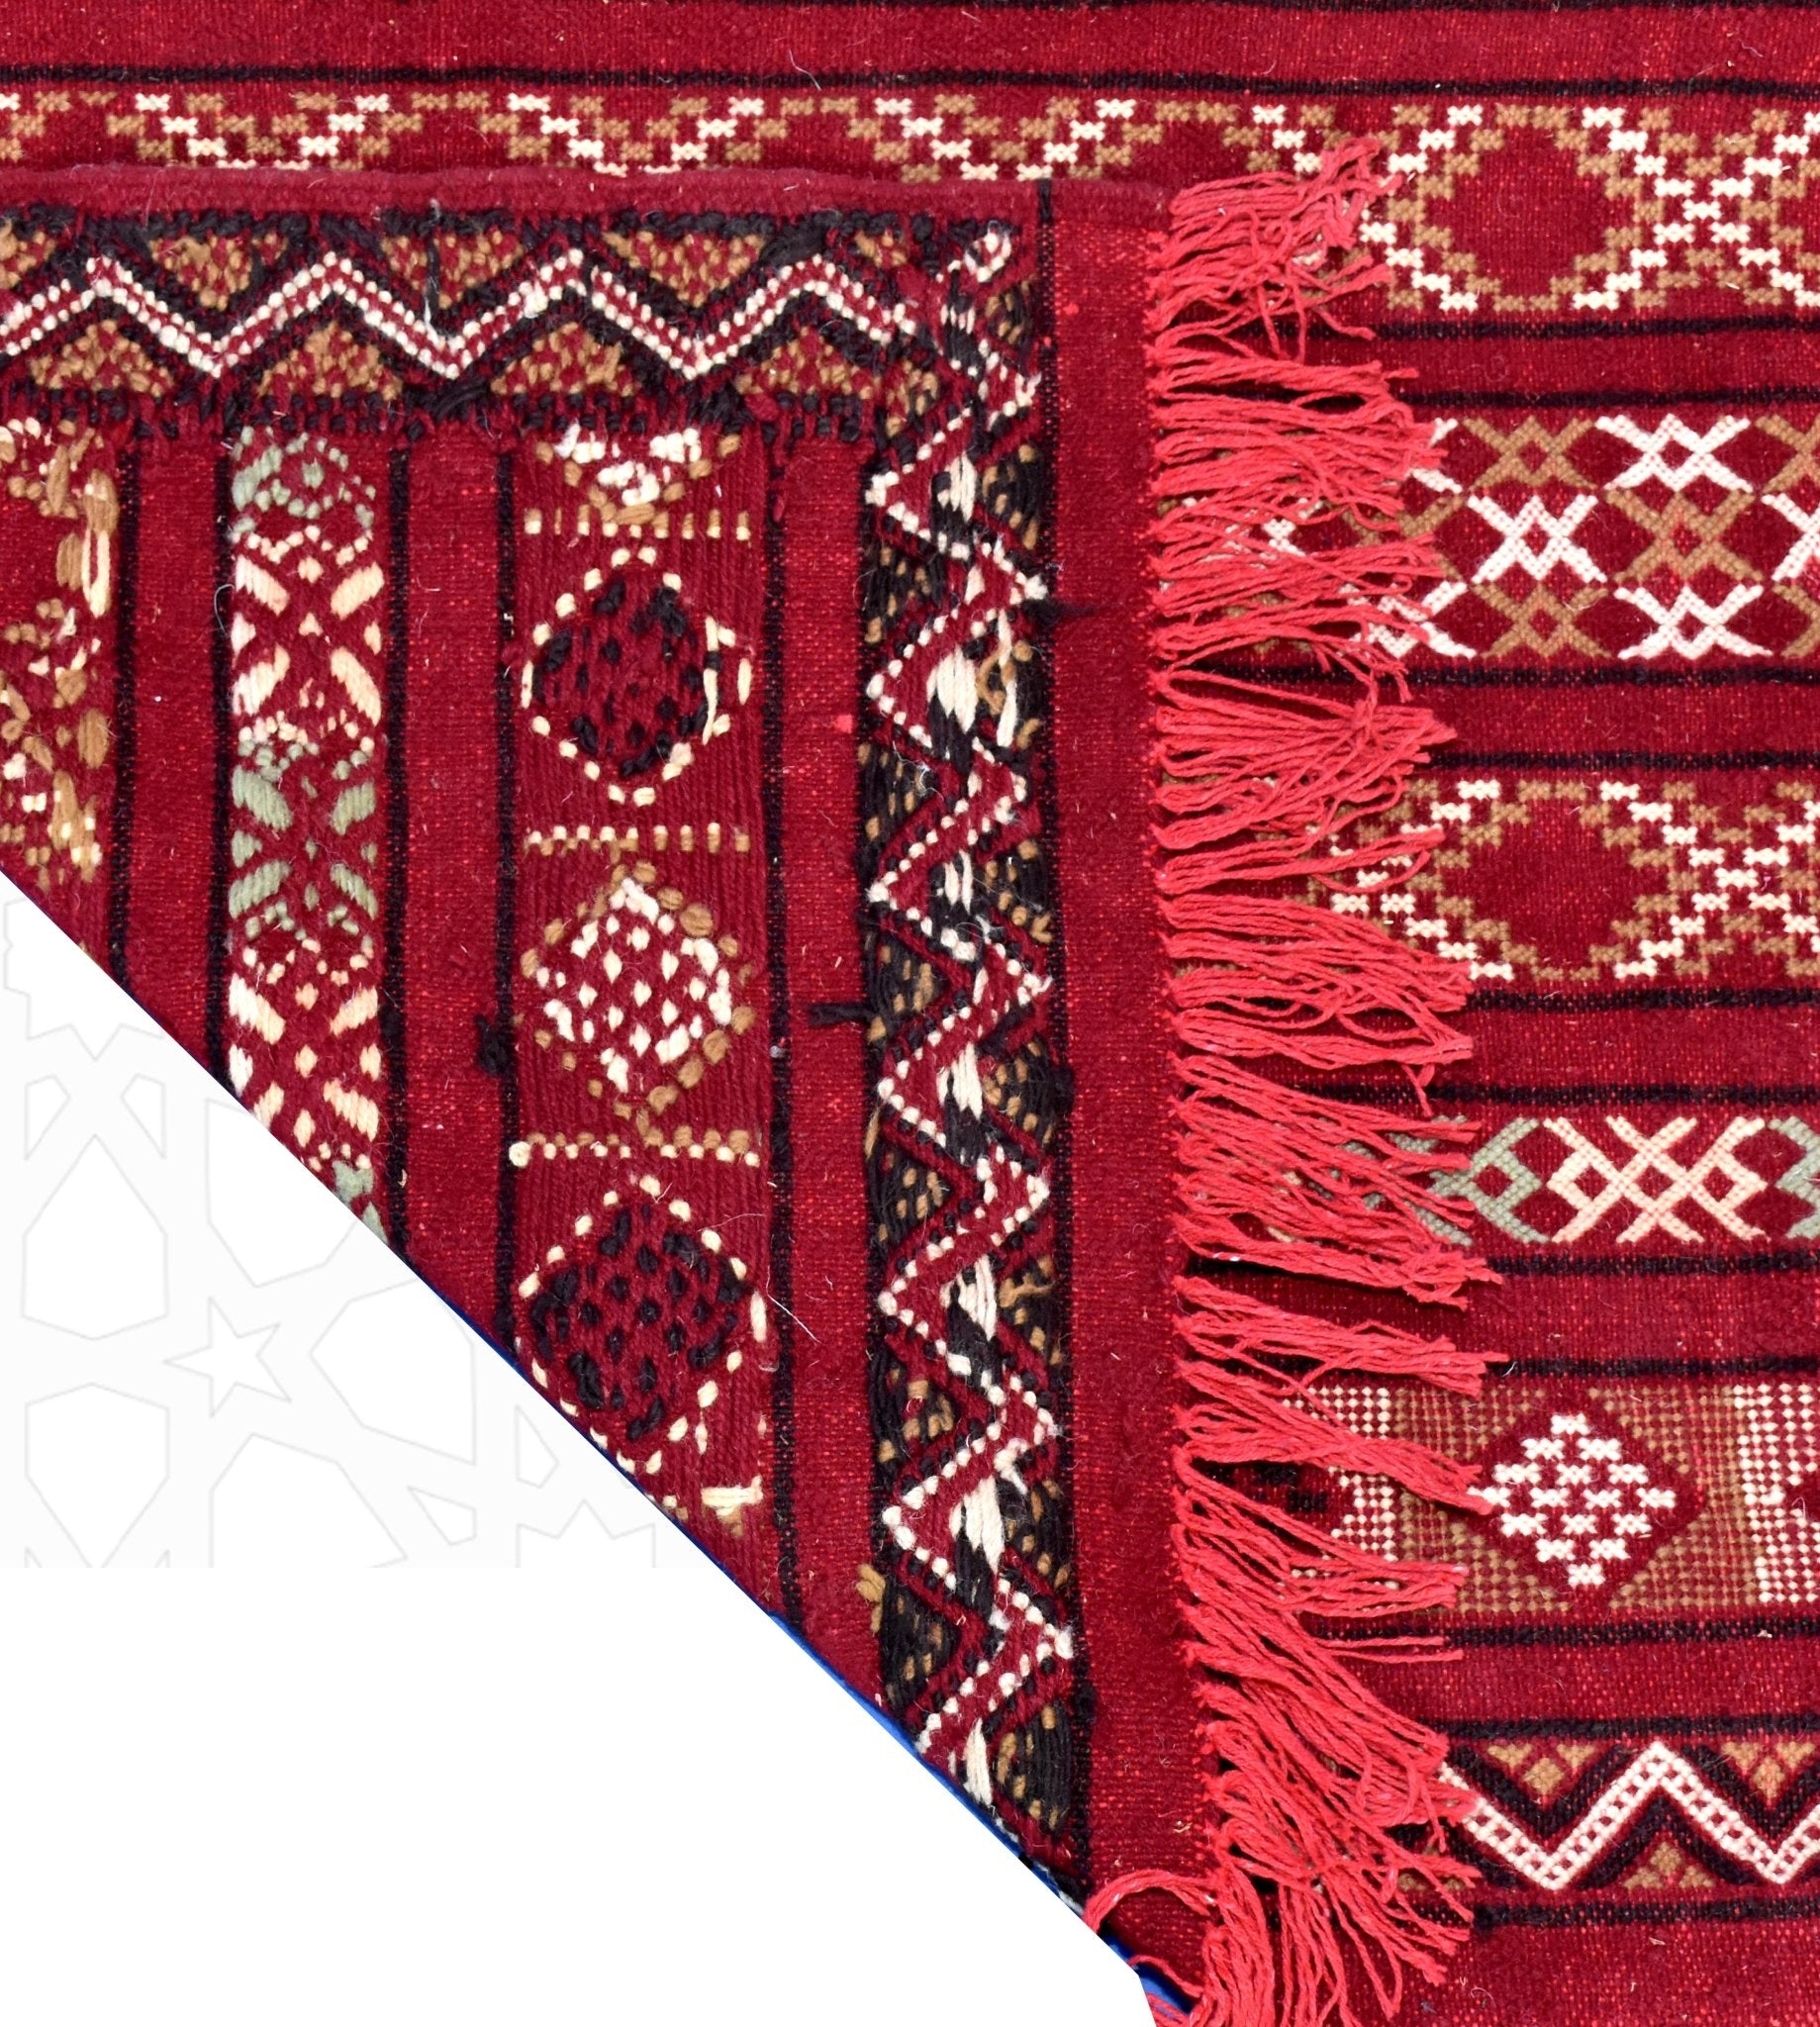 Flatweave kilim hanbal Moroccan rug - 6.57 x 9.85 ft / 200 x 300 cm - Berbers Market